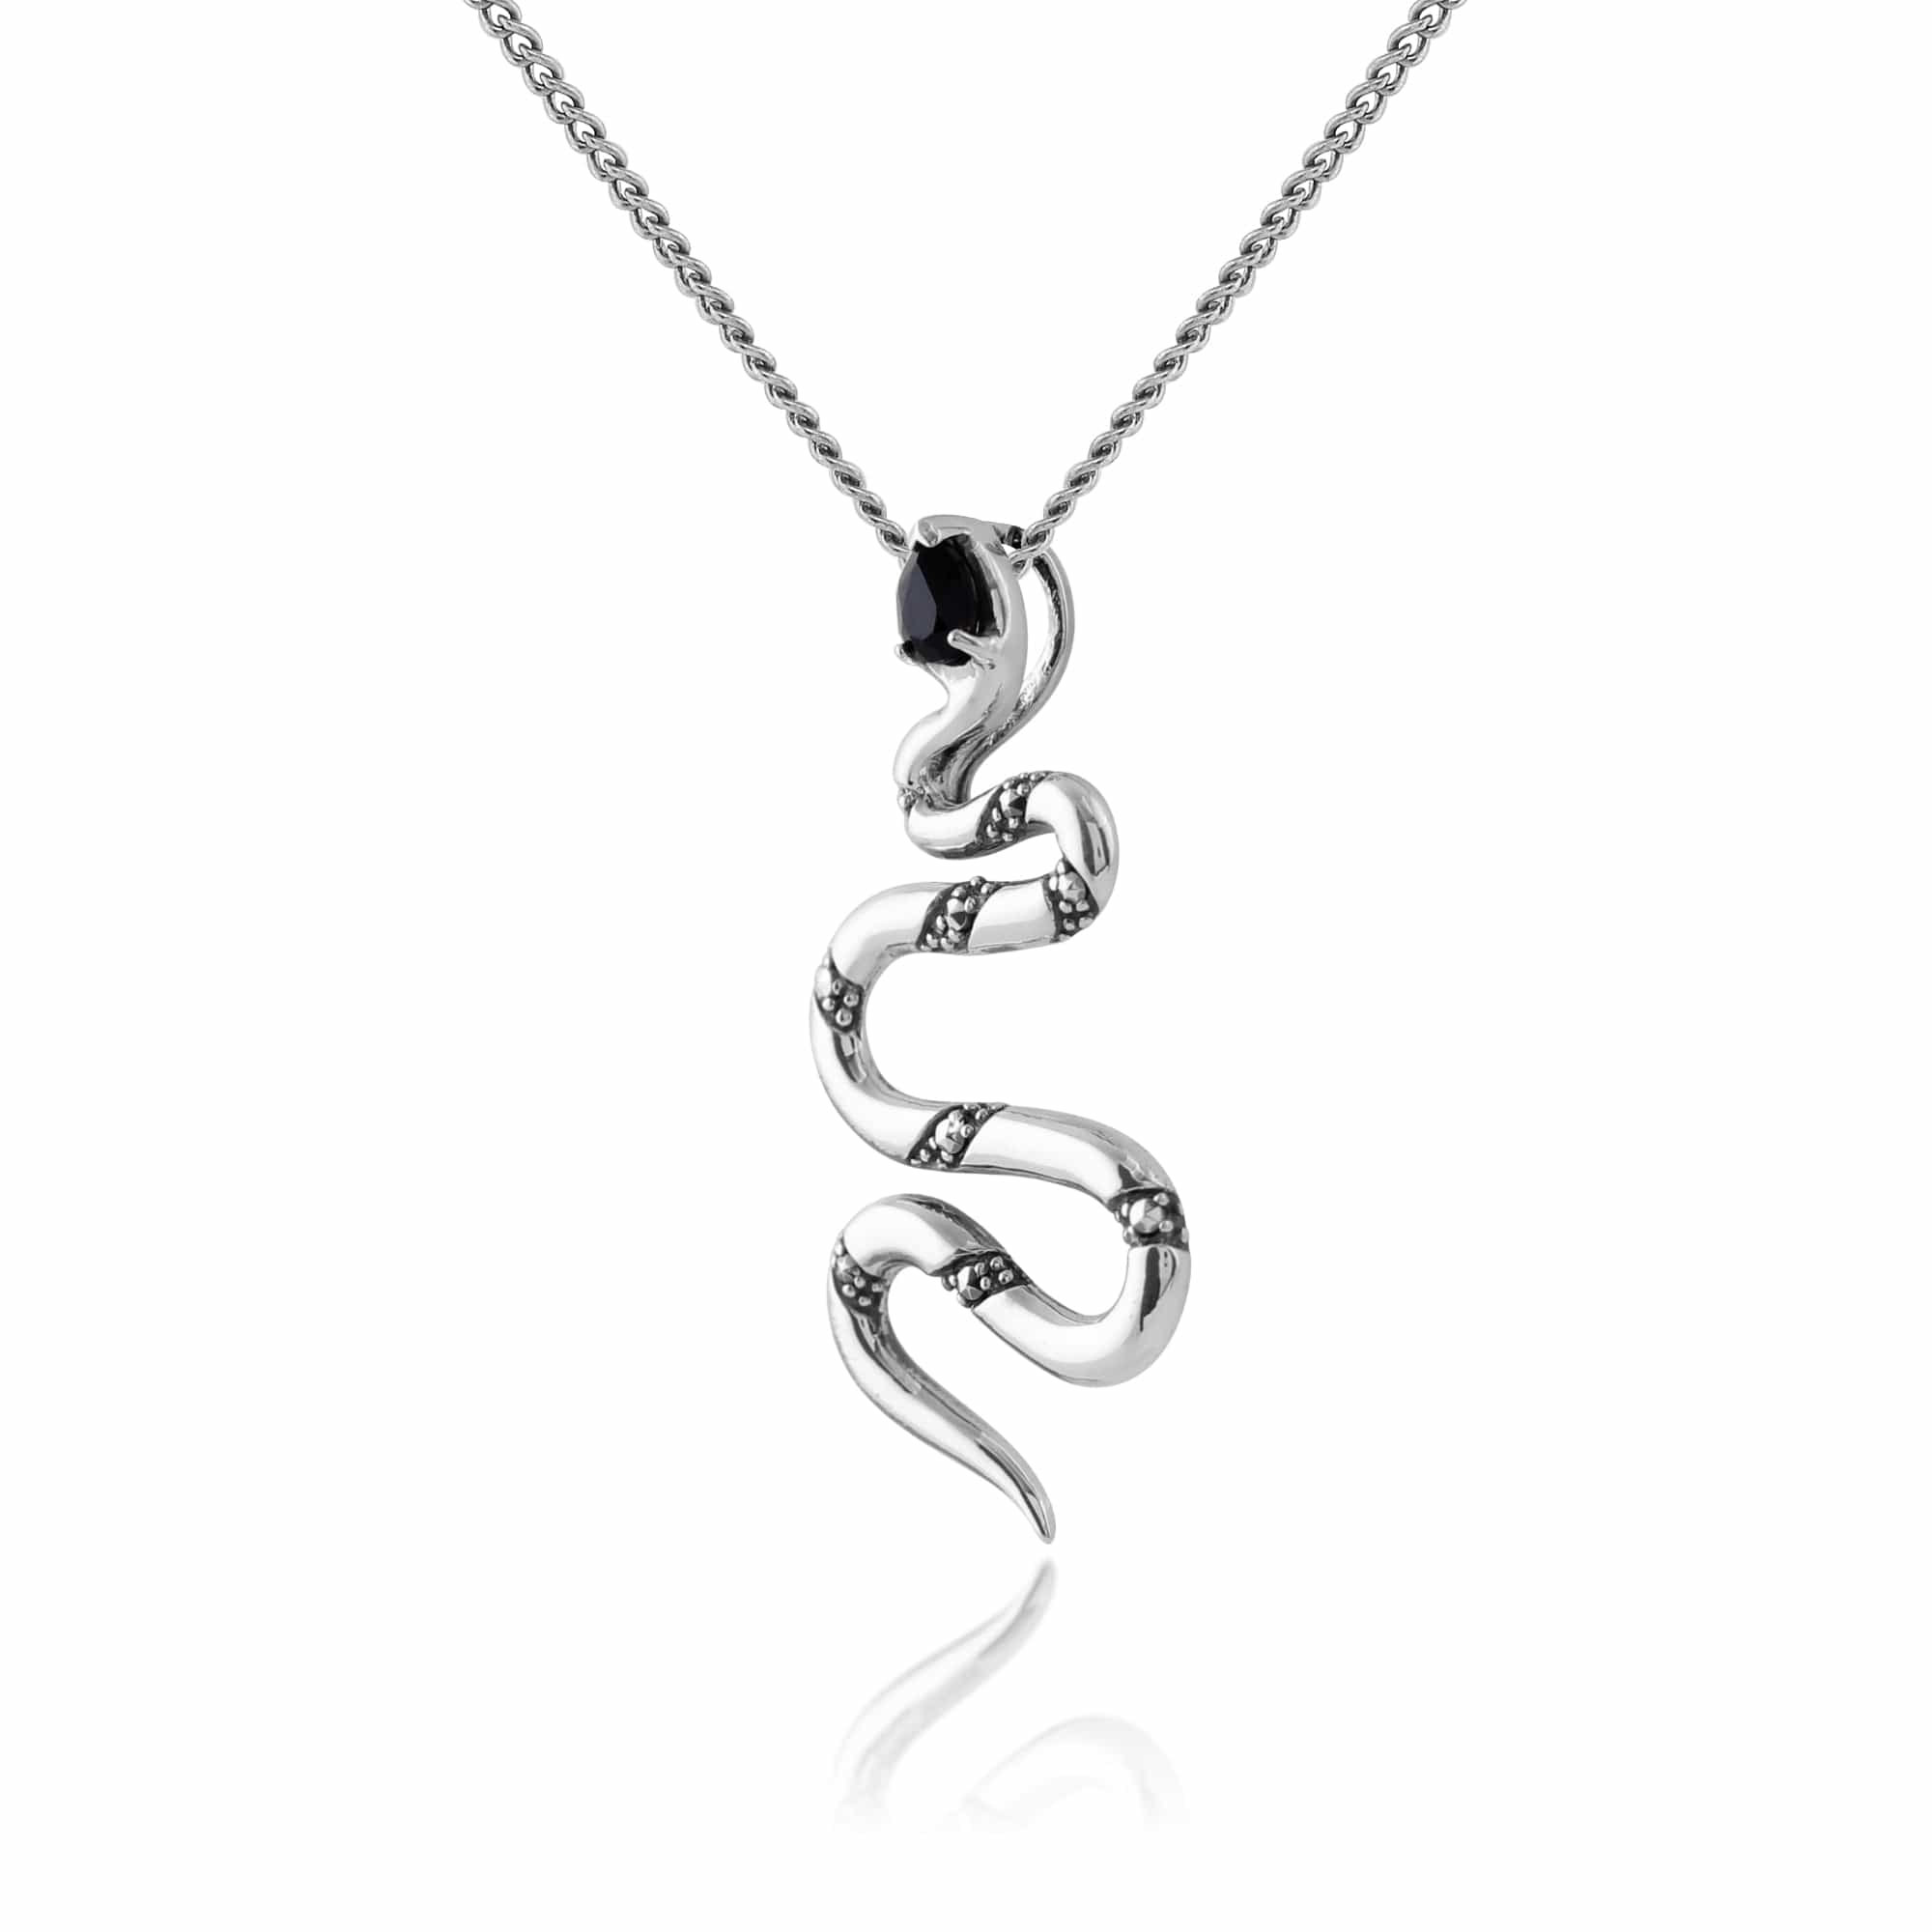 214E663902925-214N661401925 Art Nouveau Style Style Pear Black Spinel & Marcasite Snake Drop Earrings & Necklace Set in 925 Sterling Silver 5